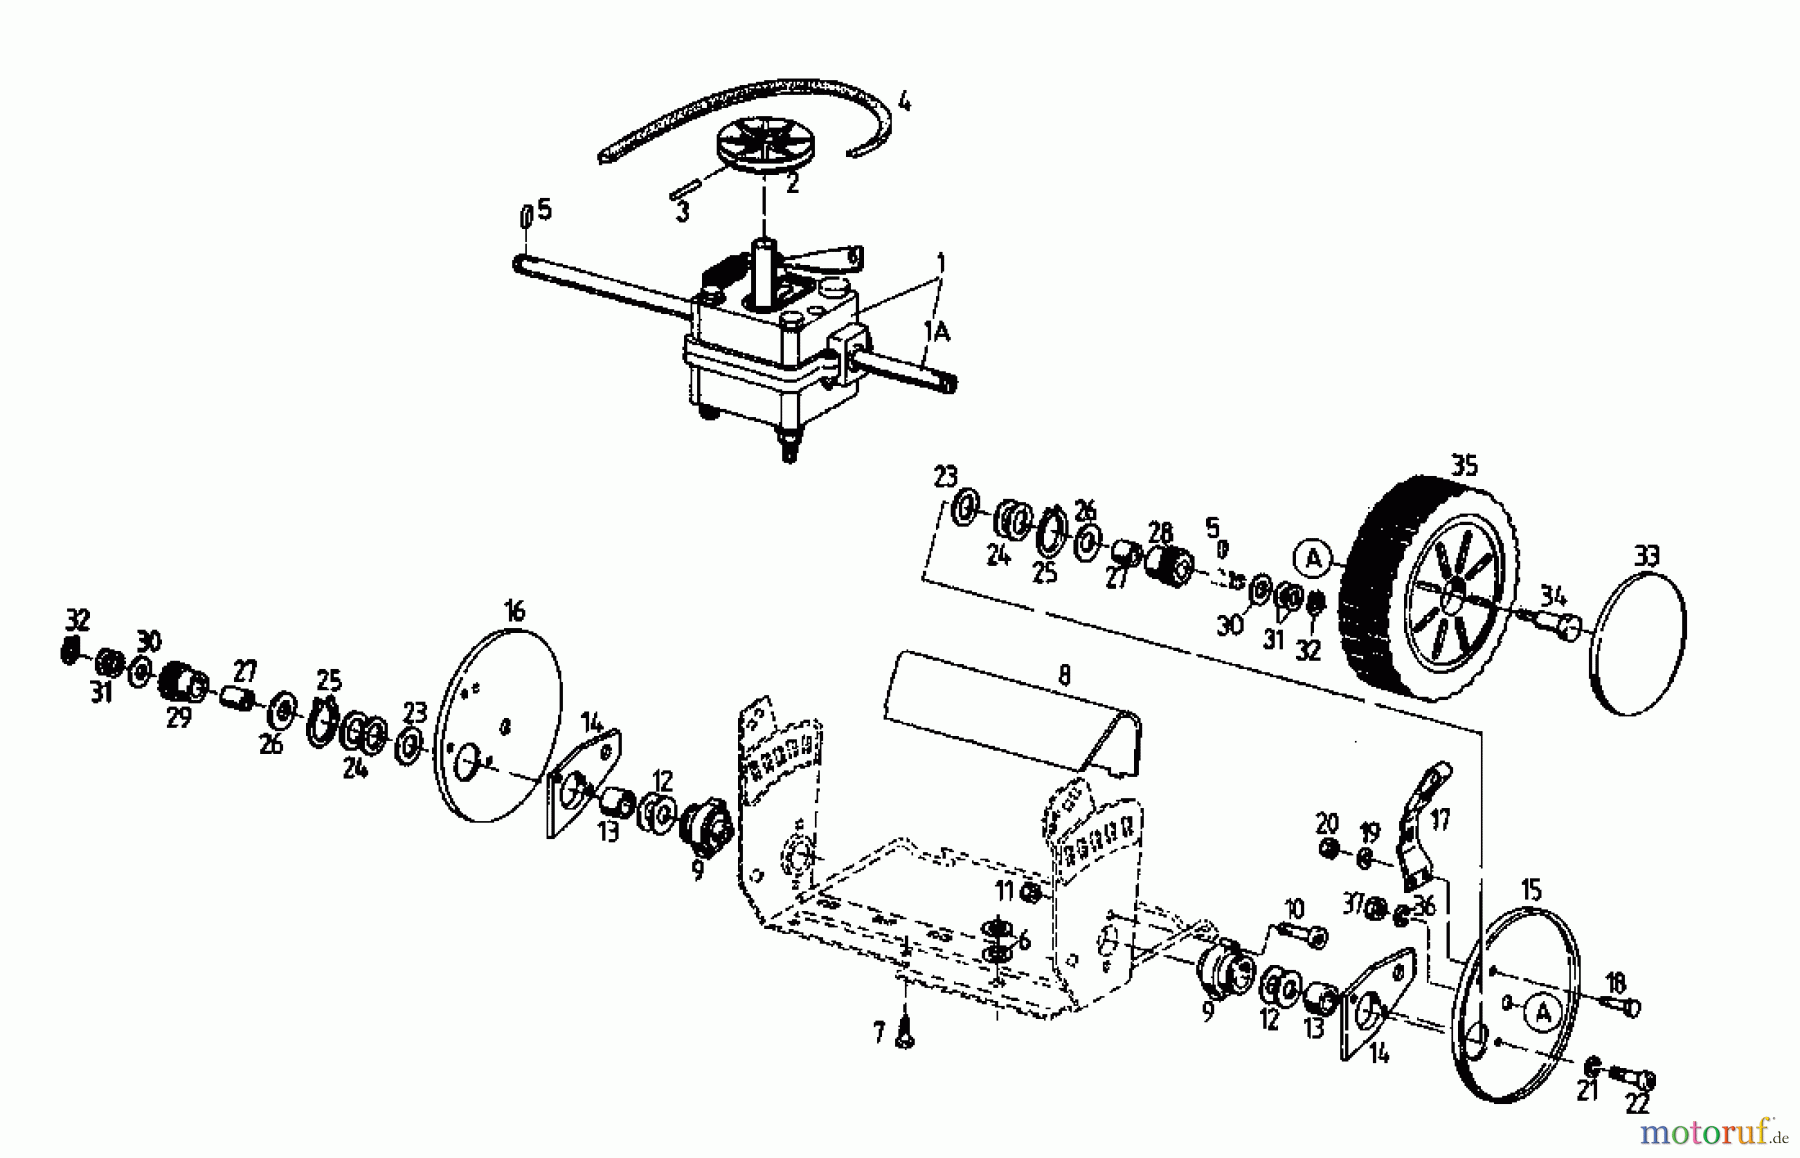  Floraself Petrol mower self propelled 3746 BLR 04033.02  (1995) Gearbox, Wheels, Cutting hight adjustment